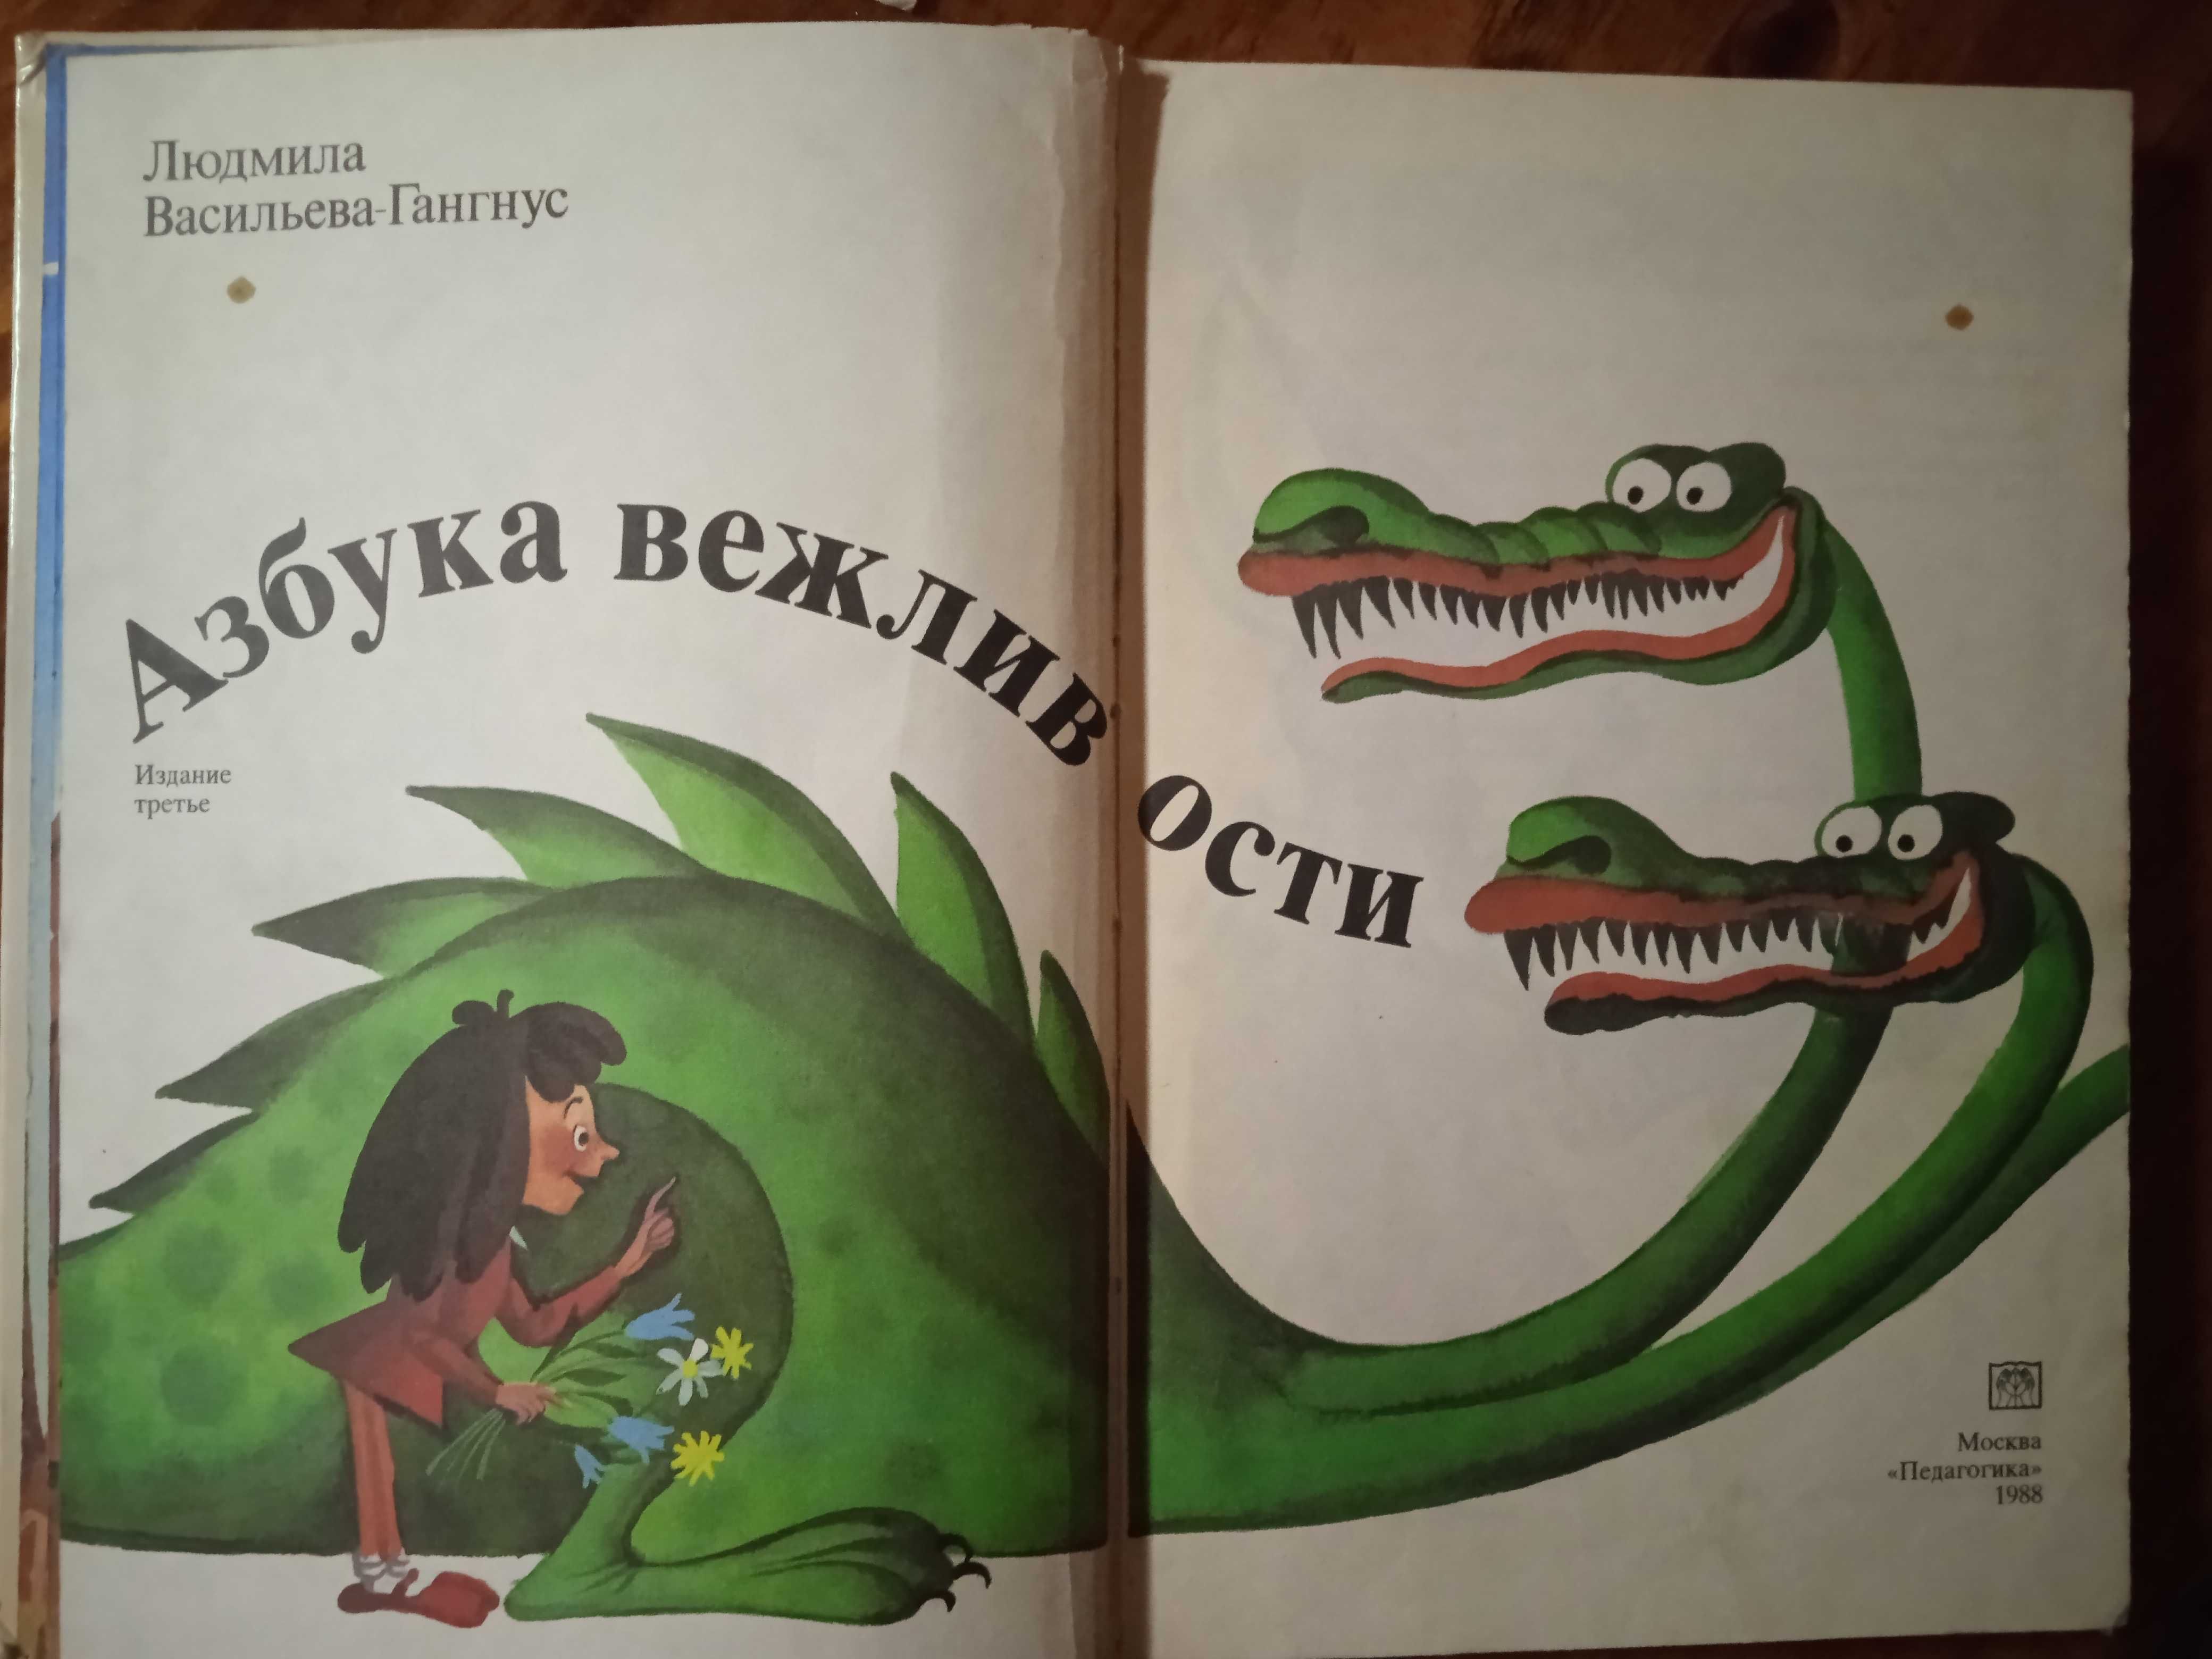 Книга для детей Л.Васильева-Гангнус "Азбука вежливости", 1988